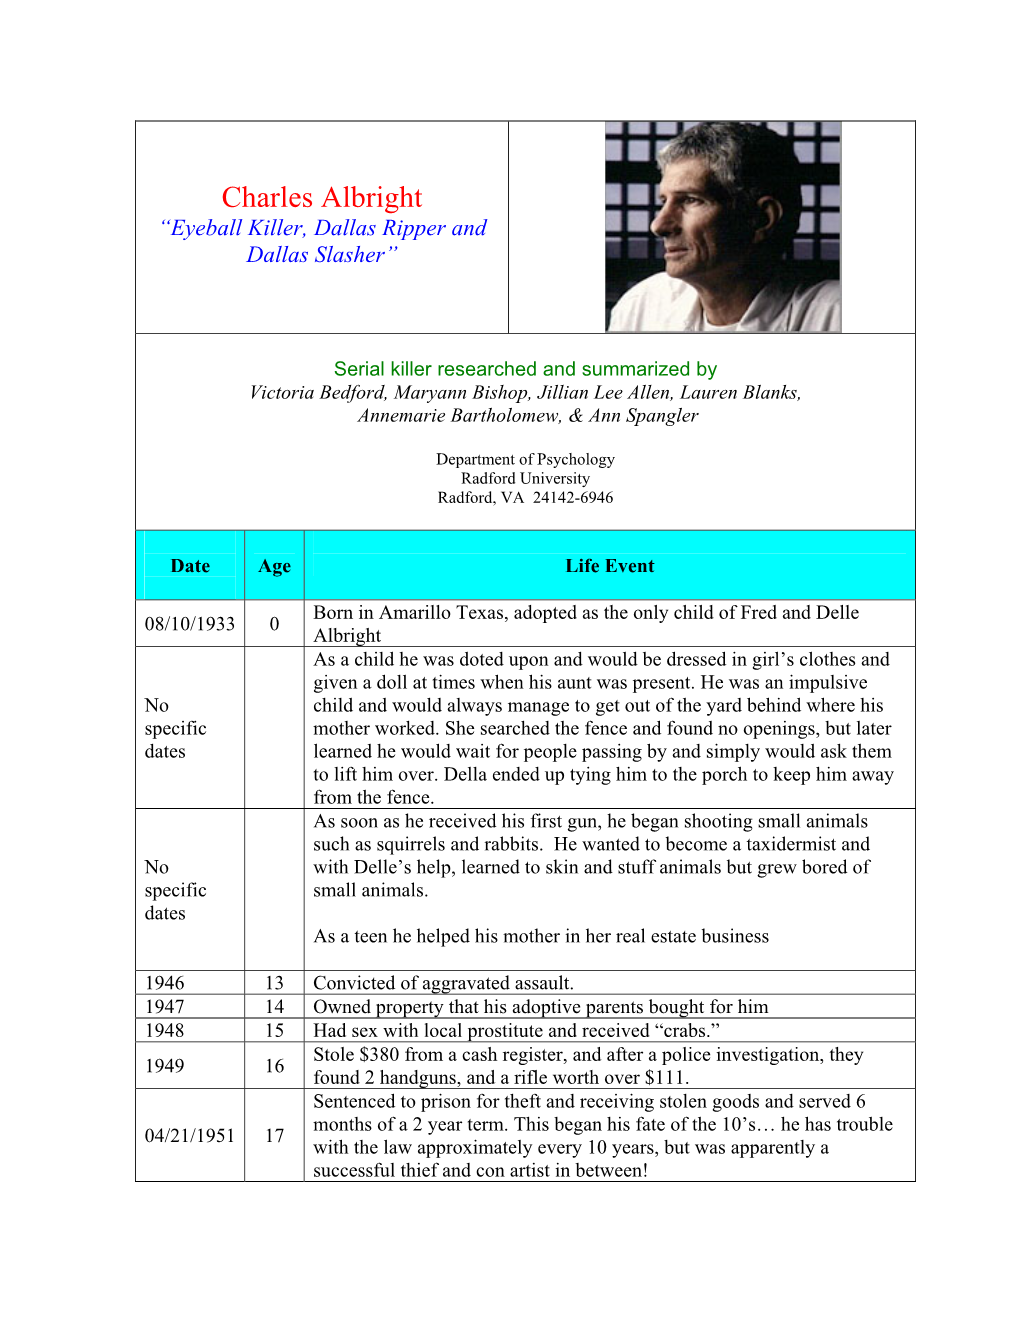 Charles Albright “Eyeball Killer, Dallas Ripper and Dallas Slasher”